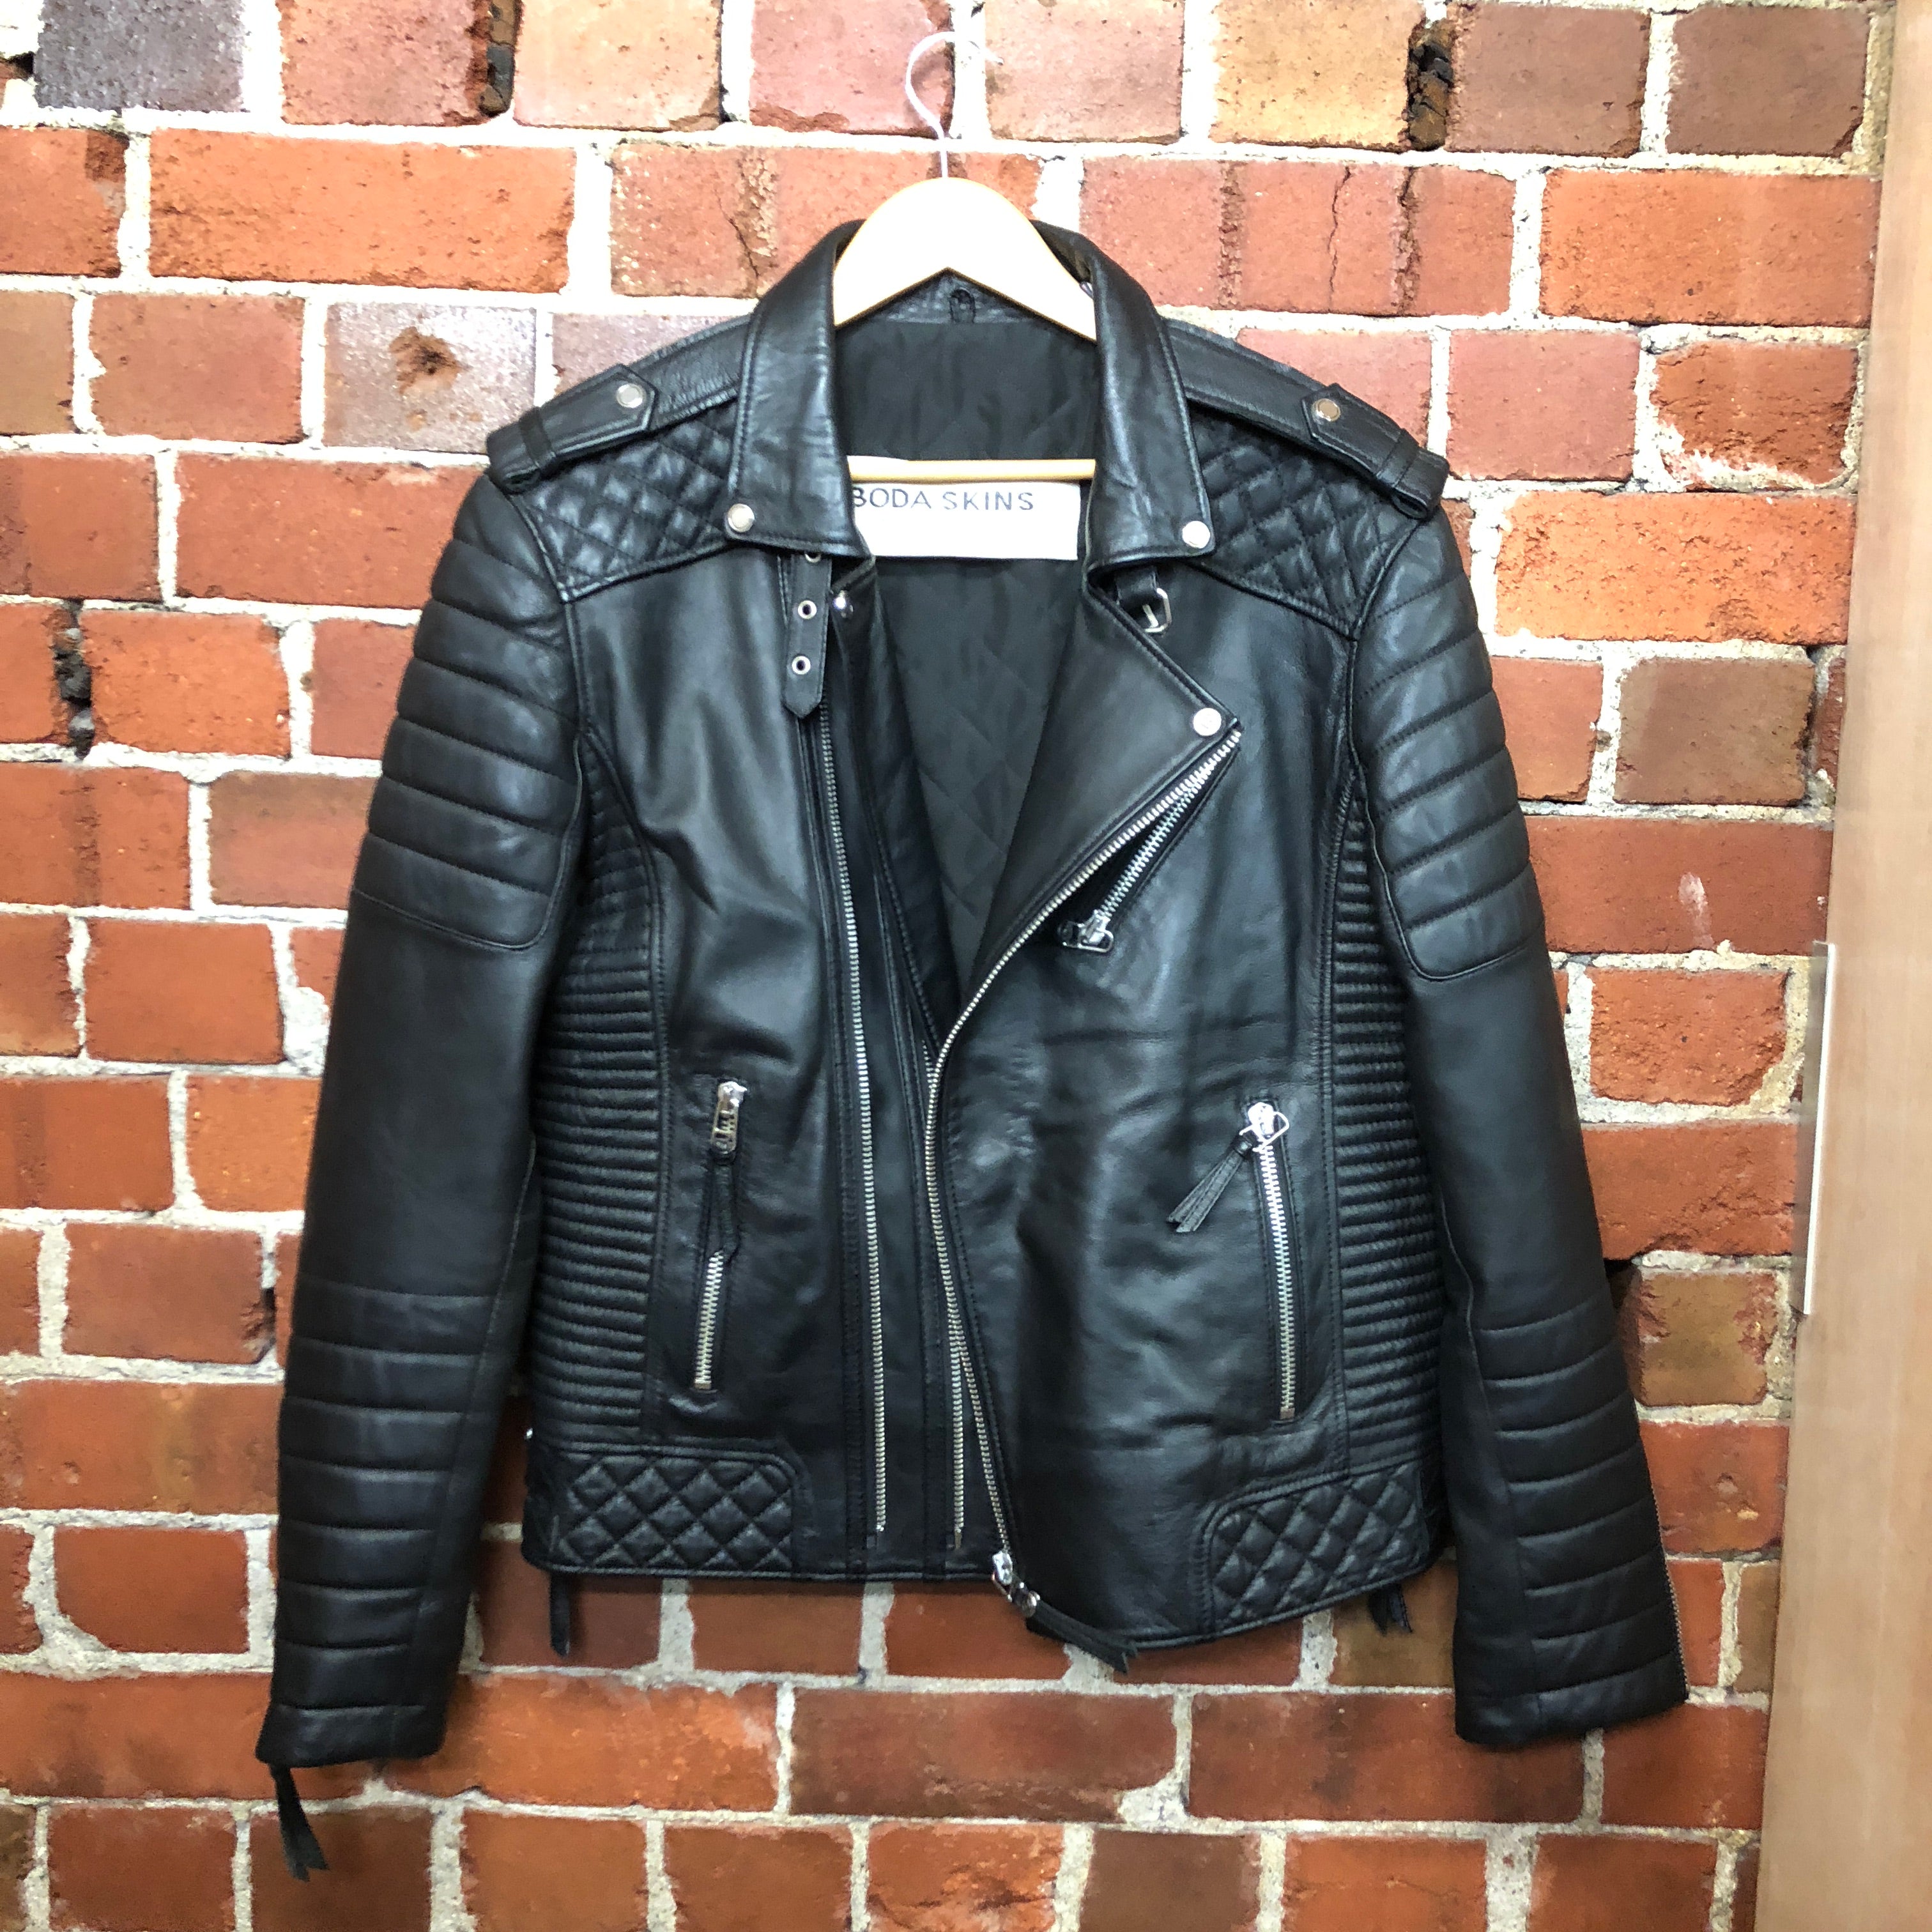 BODA SKINS leather biker jacket